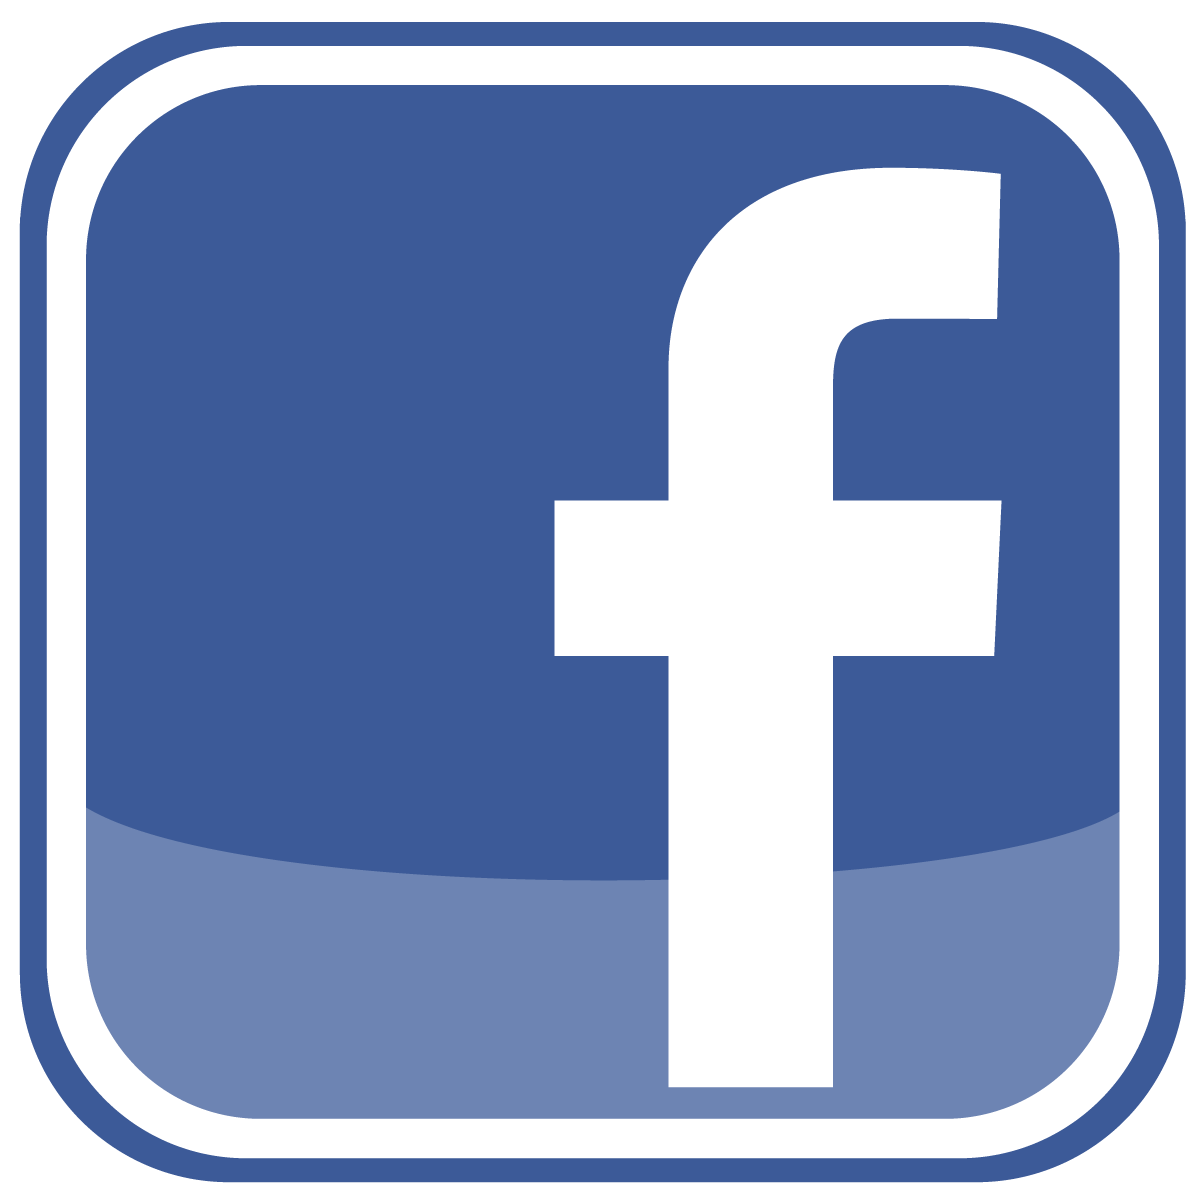 Follow Me On Facebook